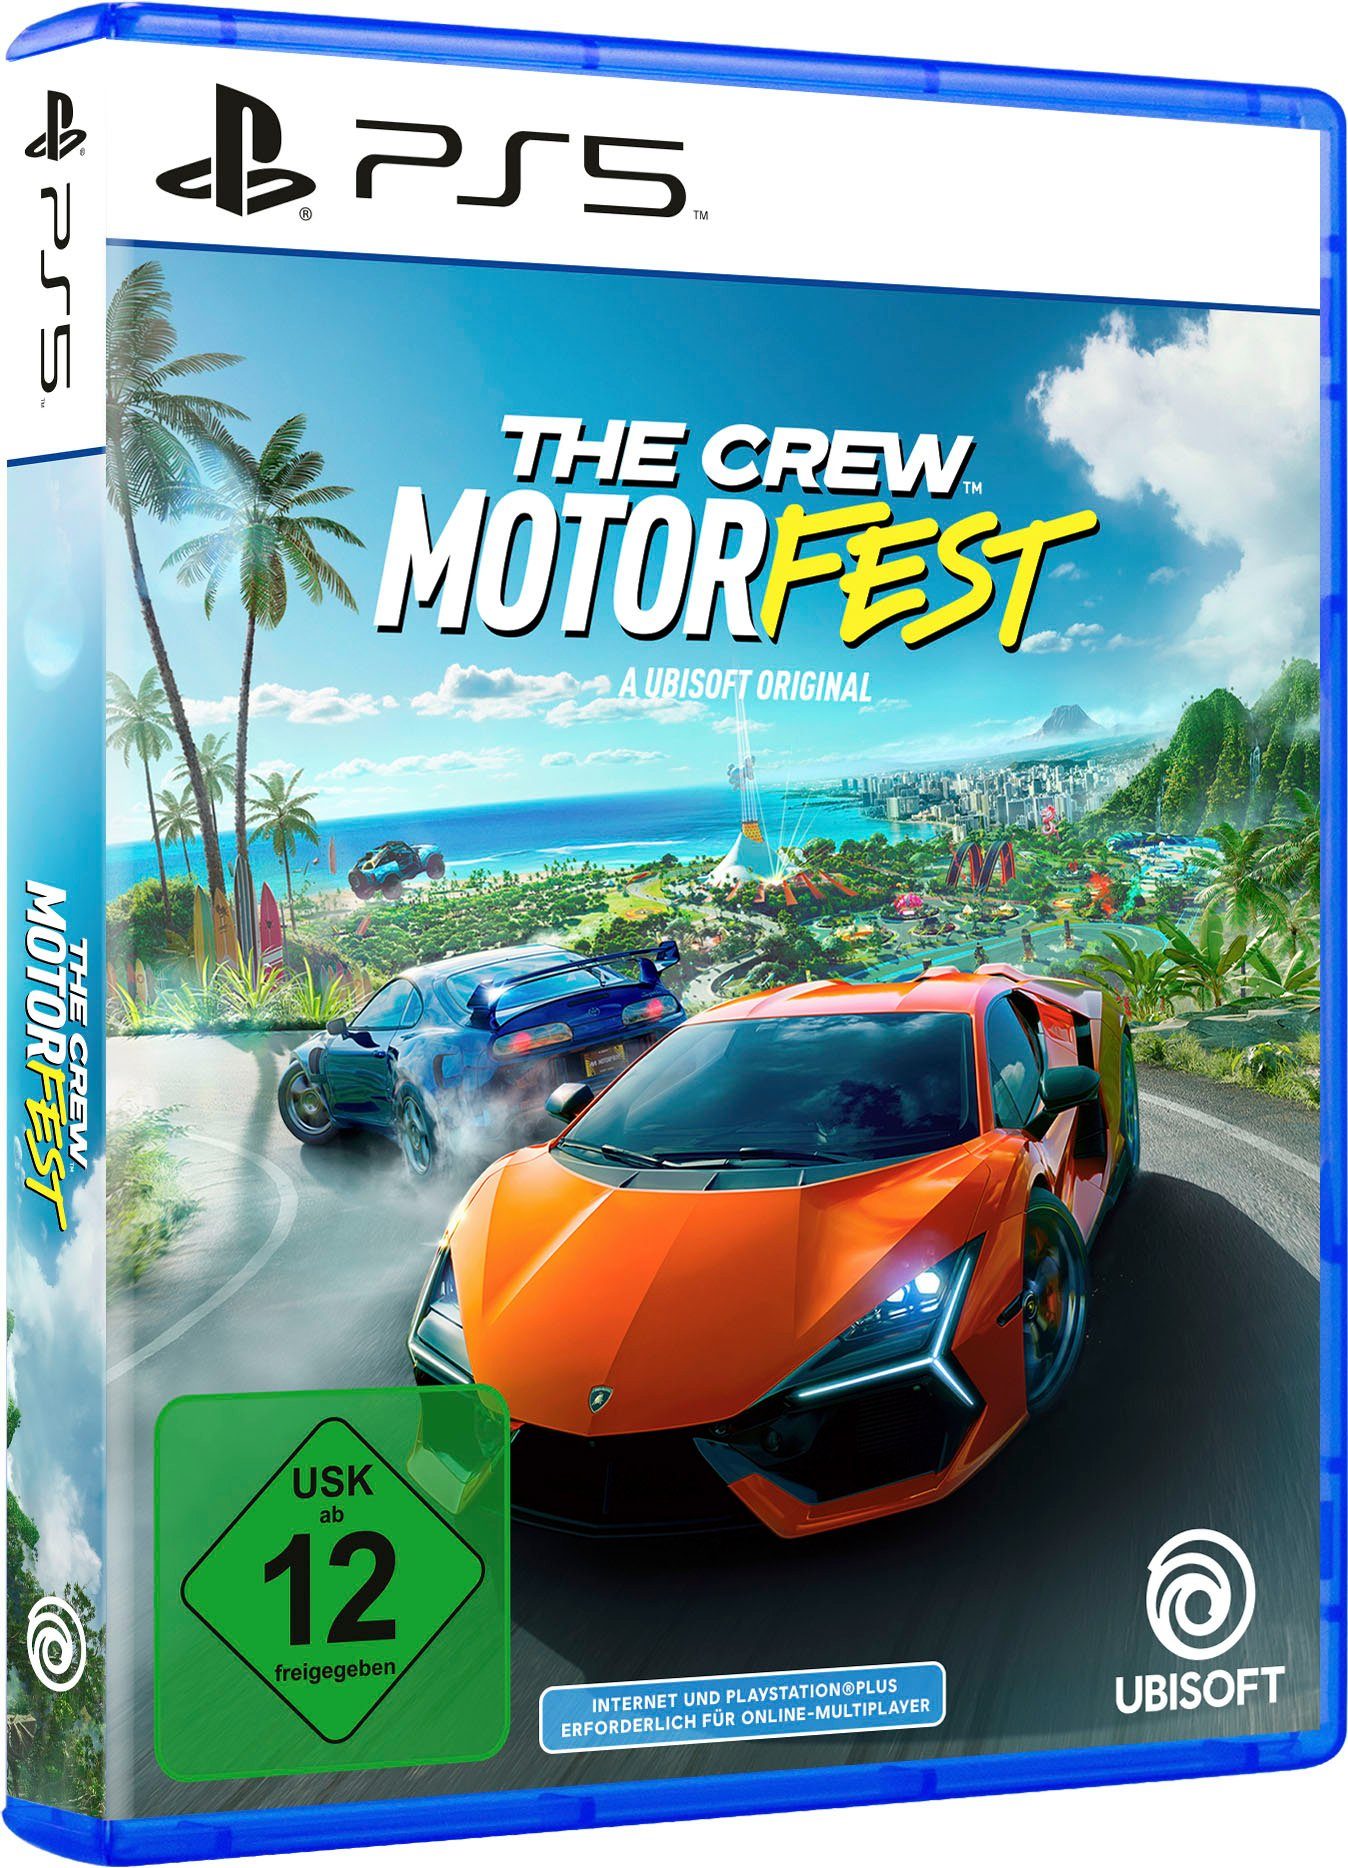 The UBISOFT Standard Motorfest Edition 5 Crew™ PlayStation